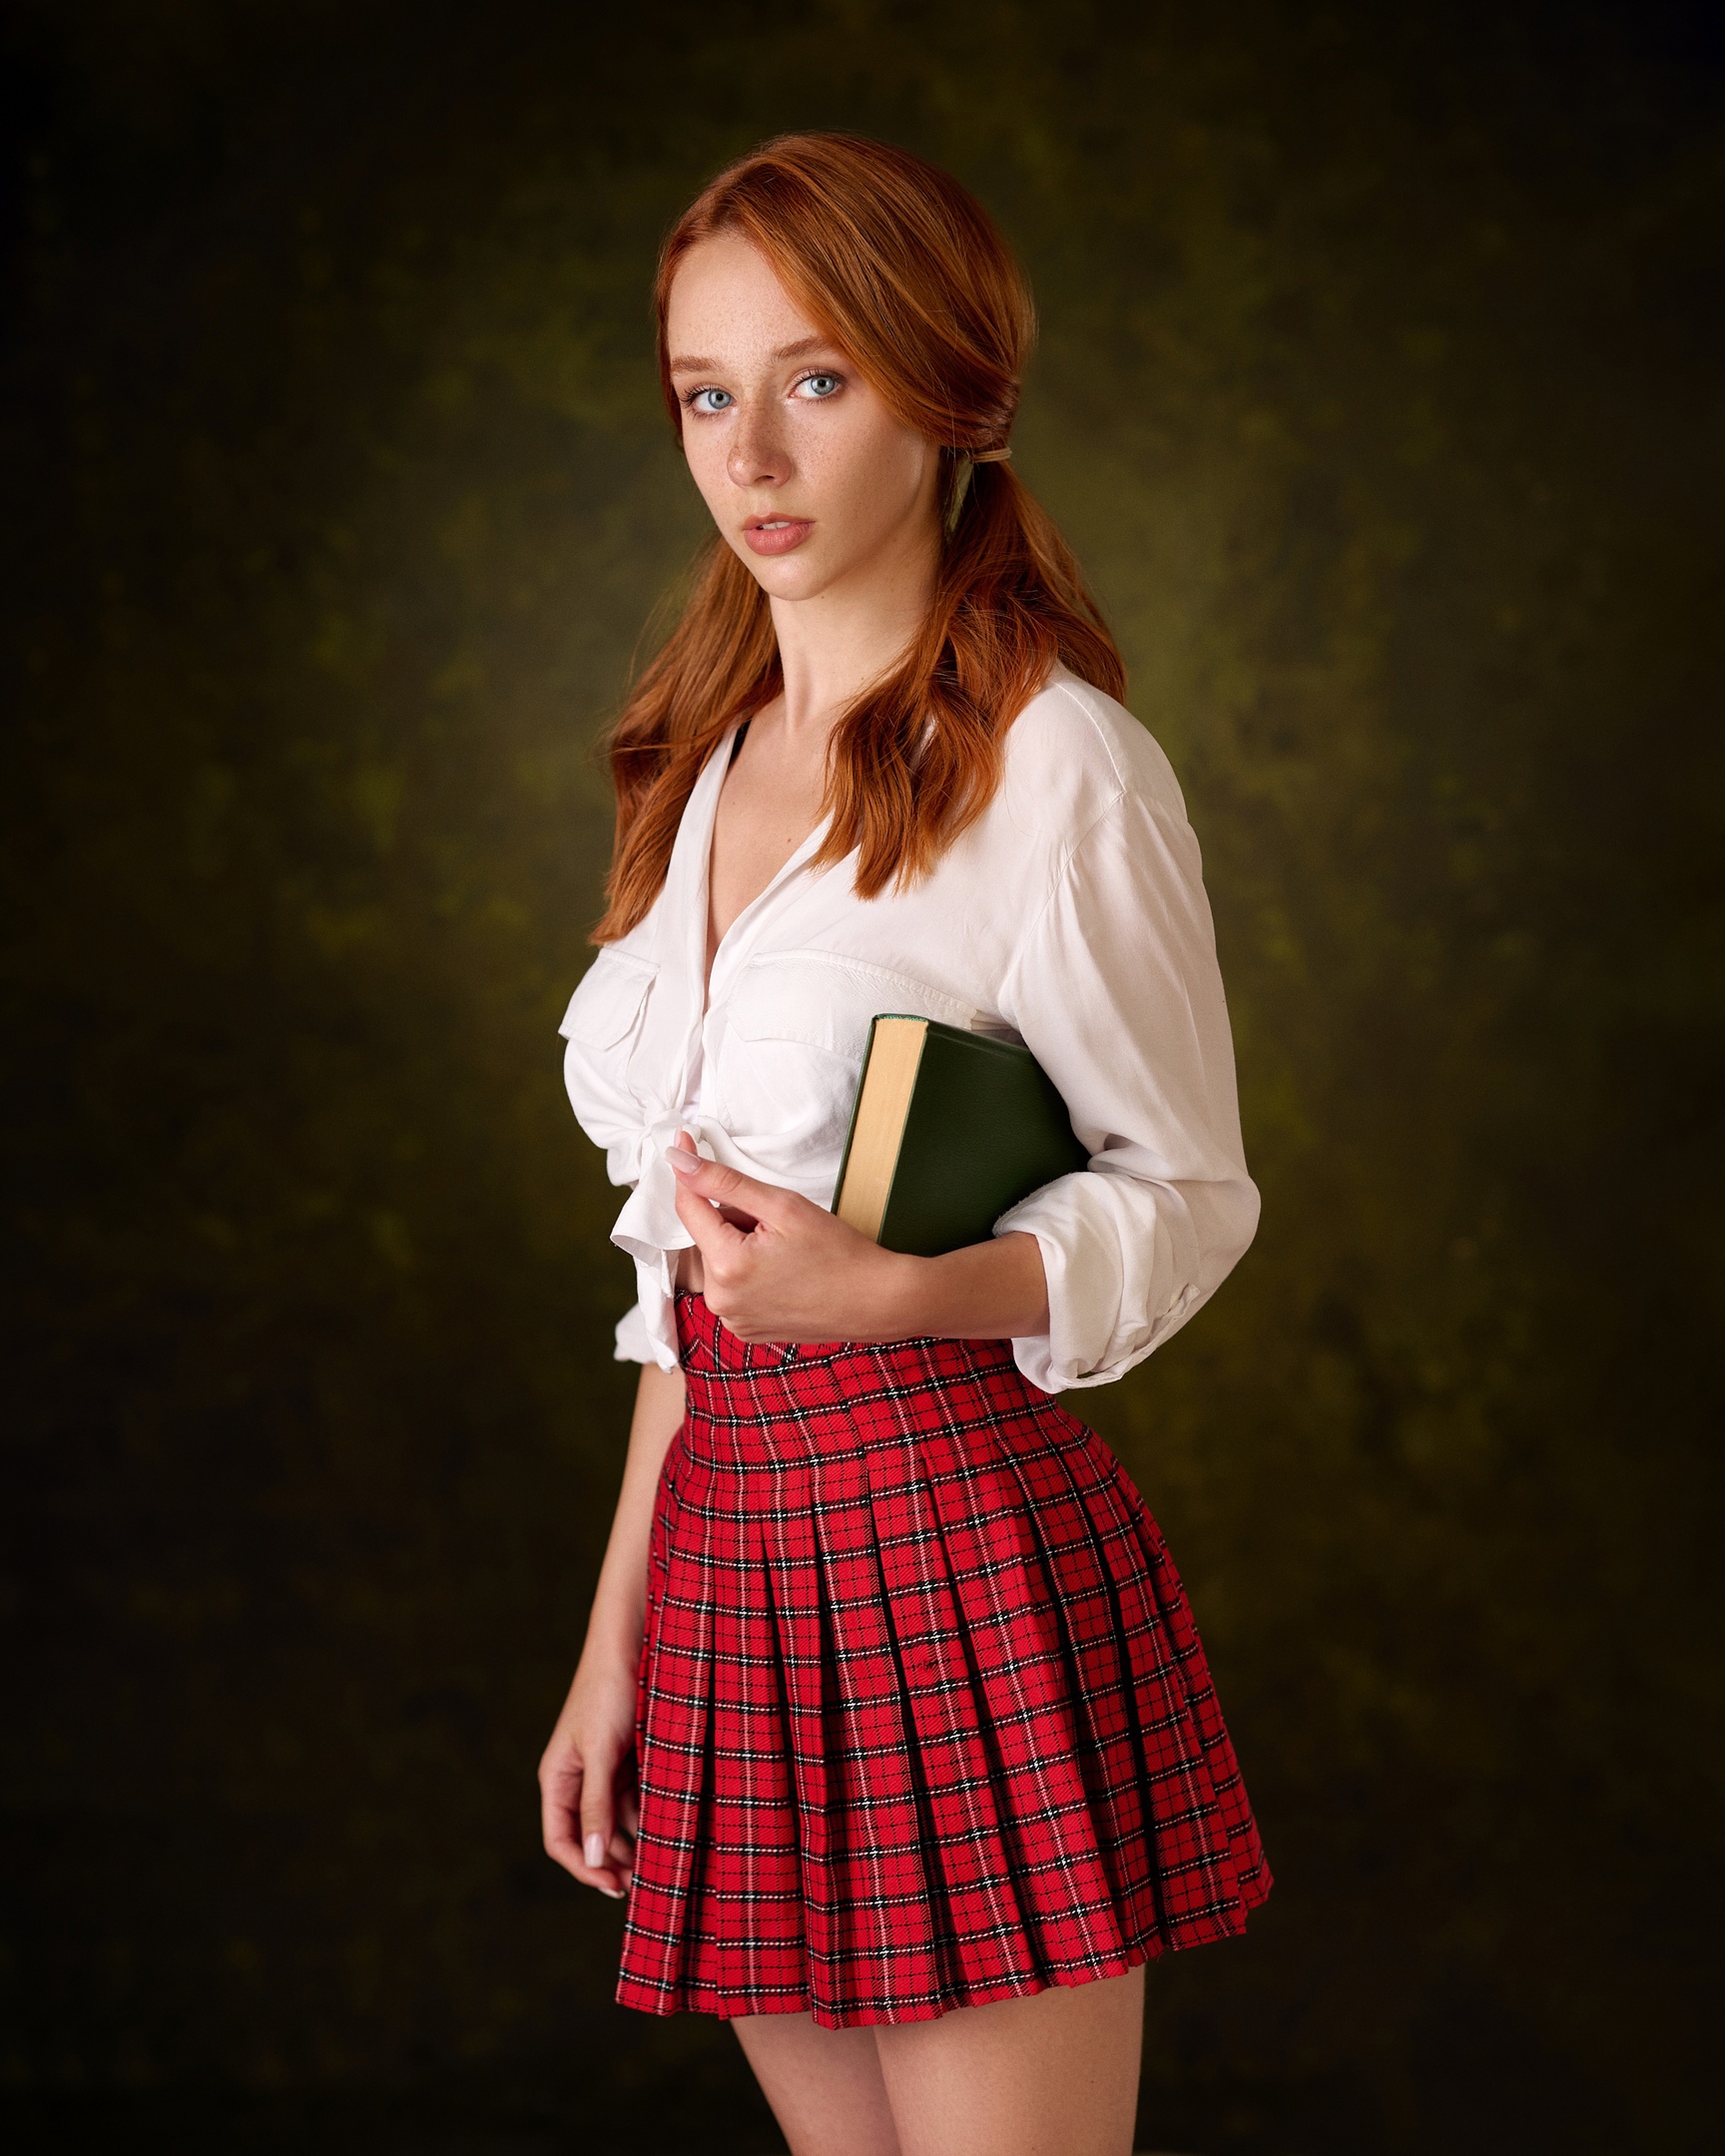 Max Pyzhik Women Redhead Blue Eyes Twintails Freckles Plaid Books Schoolgirl Simple Background 1728x2160